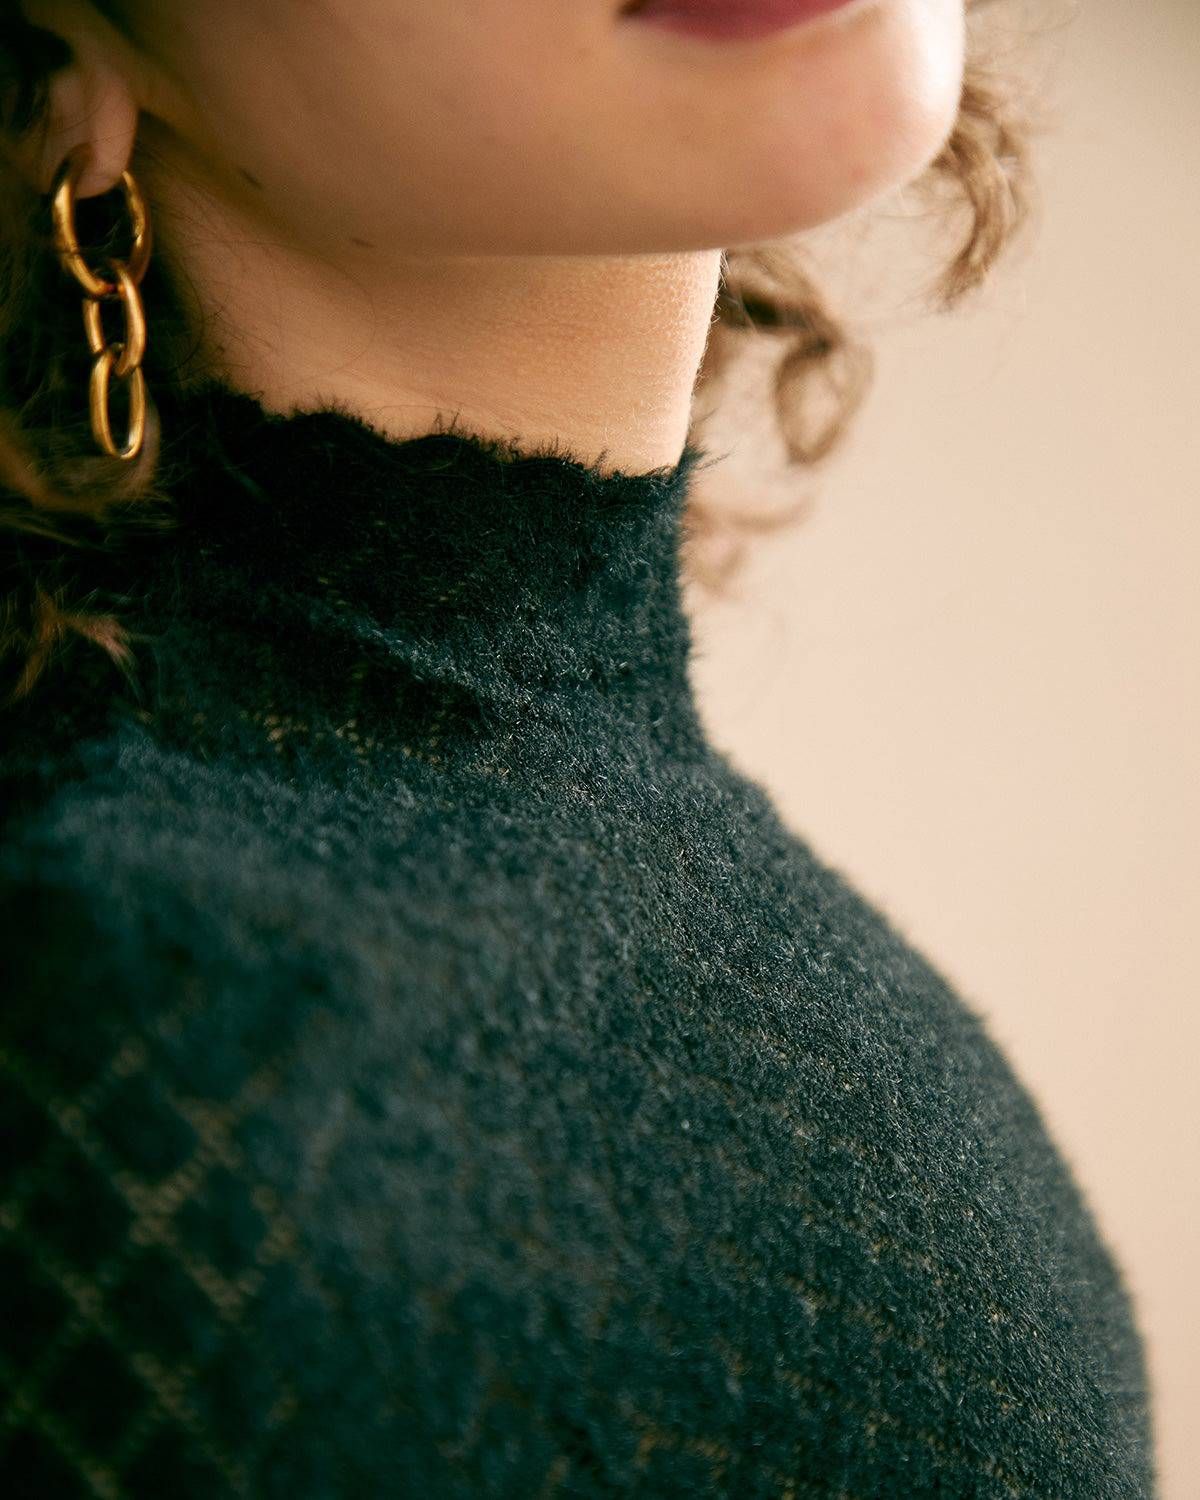 The Floral See Through Knitwear - Women's Long Sleeve Stylish High Neck Knitwear, Black See Throu... | rihoas.com